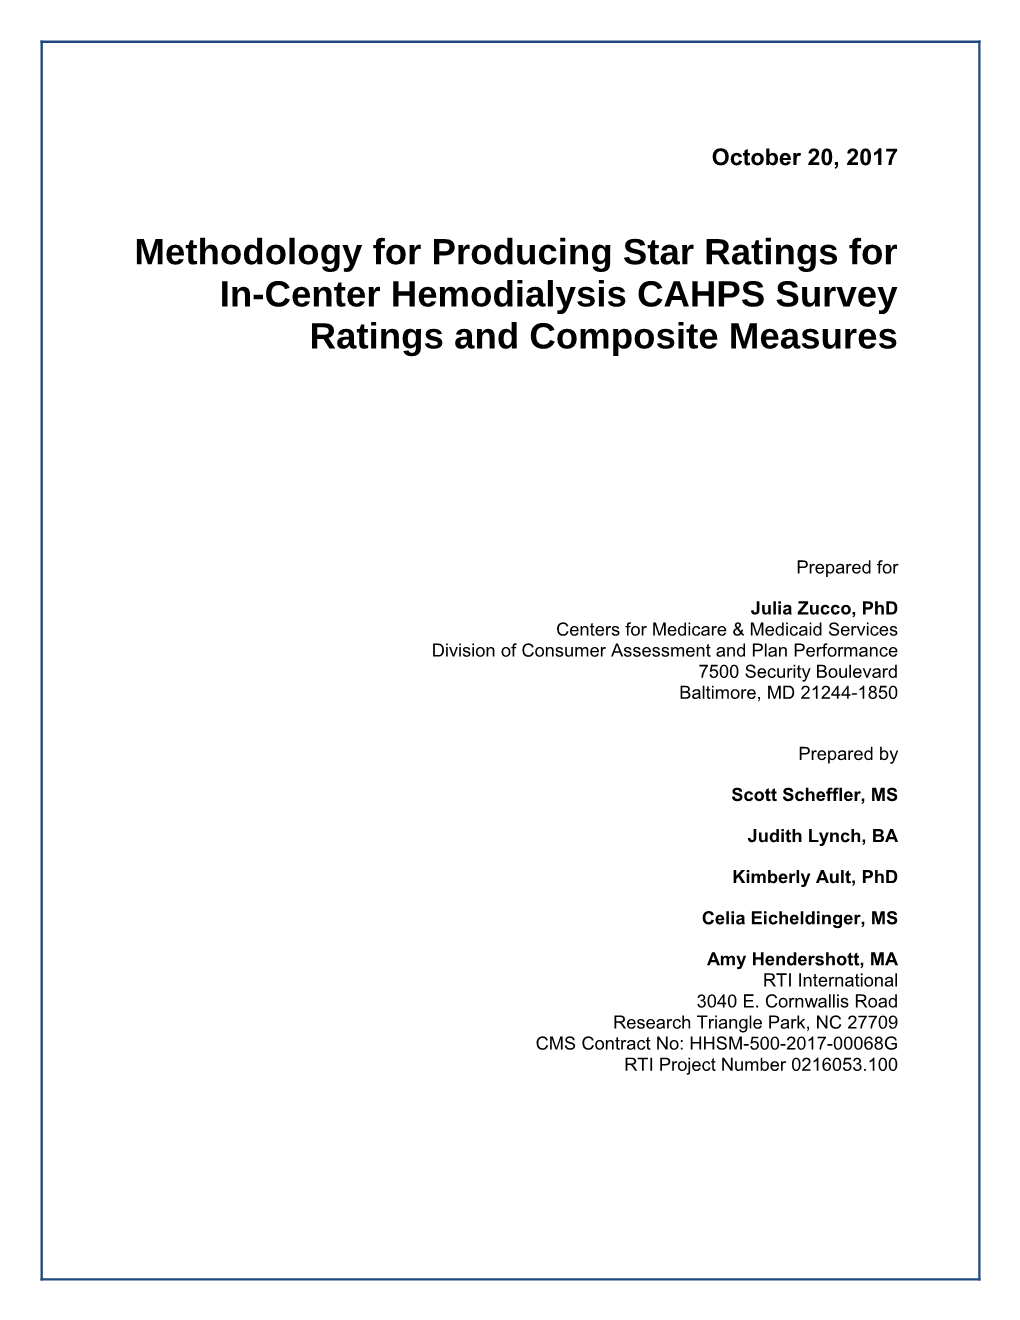 Methodology for Producing Star Ratings for In-Center Hemodialysis CAHPS Survey Ratings